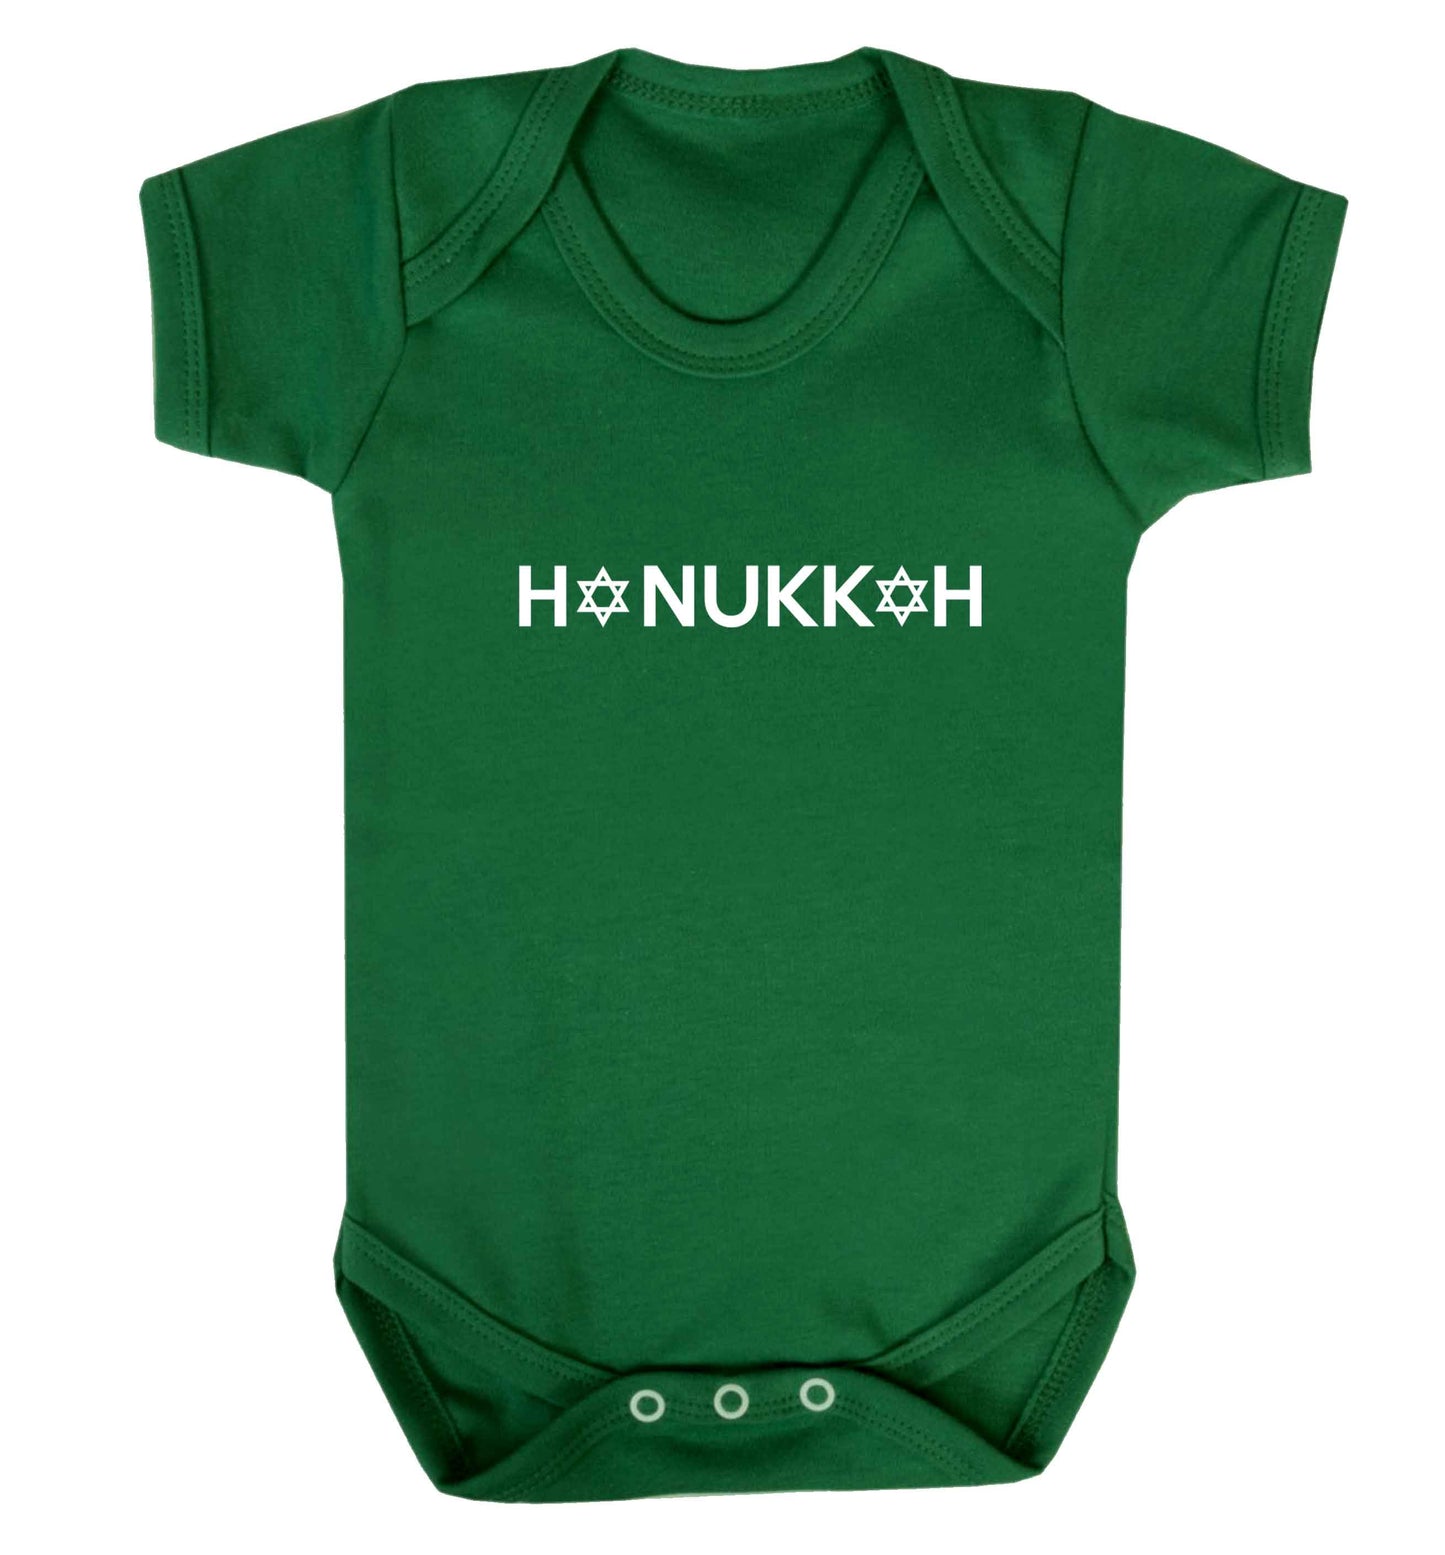 Hanukkah star of david baby vest green 18-24 months